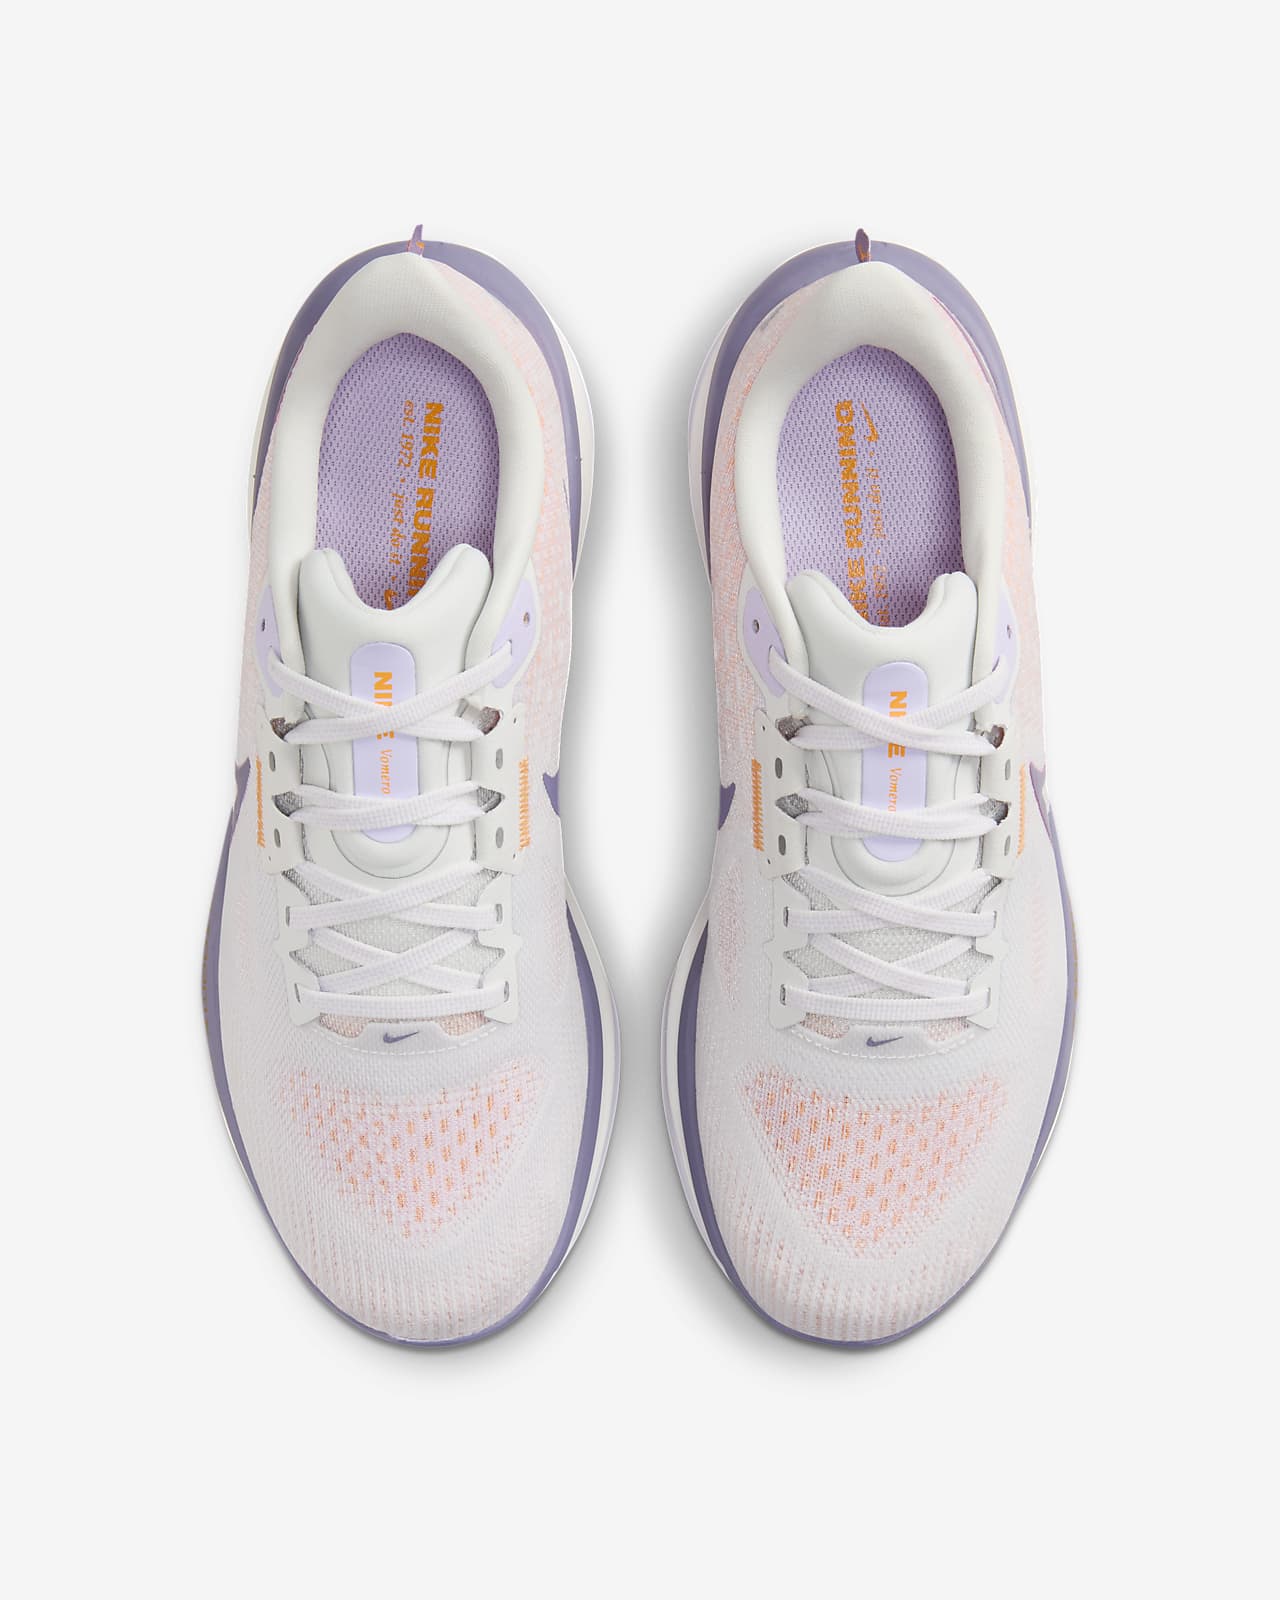 Nike Vomero 17 Women's Road Running Shoes